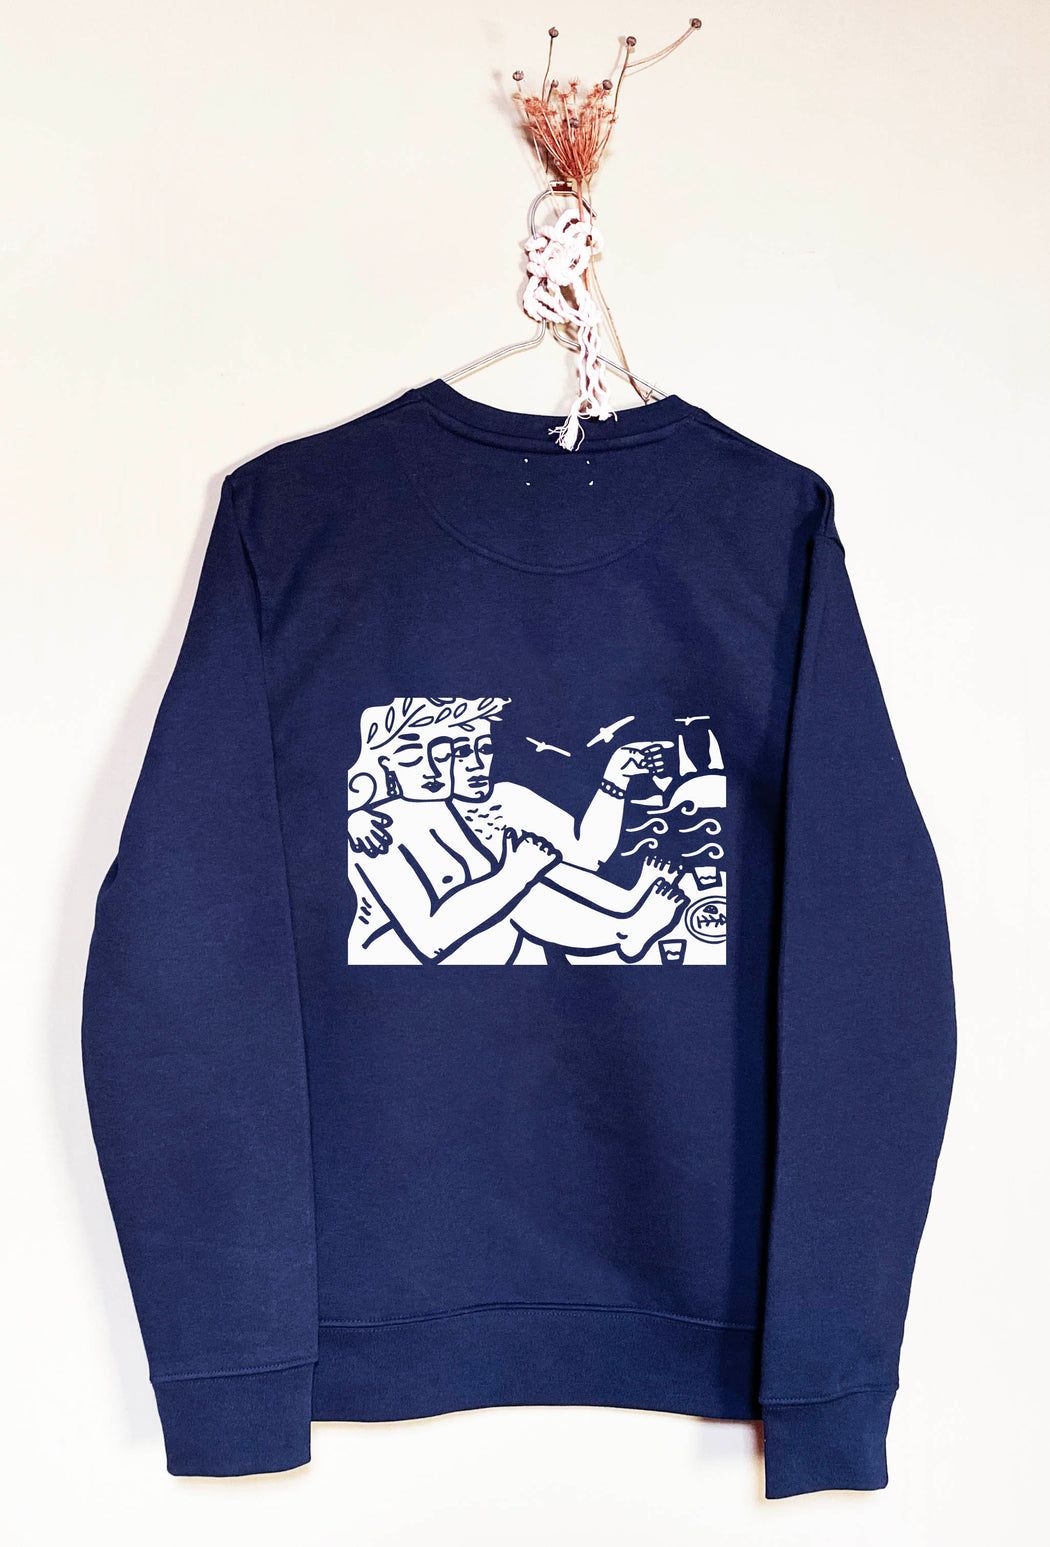 together - navy blue sweatshirt